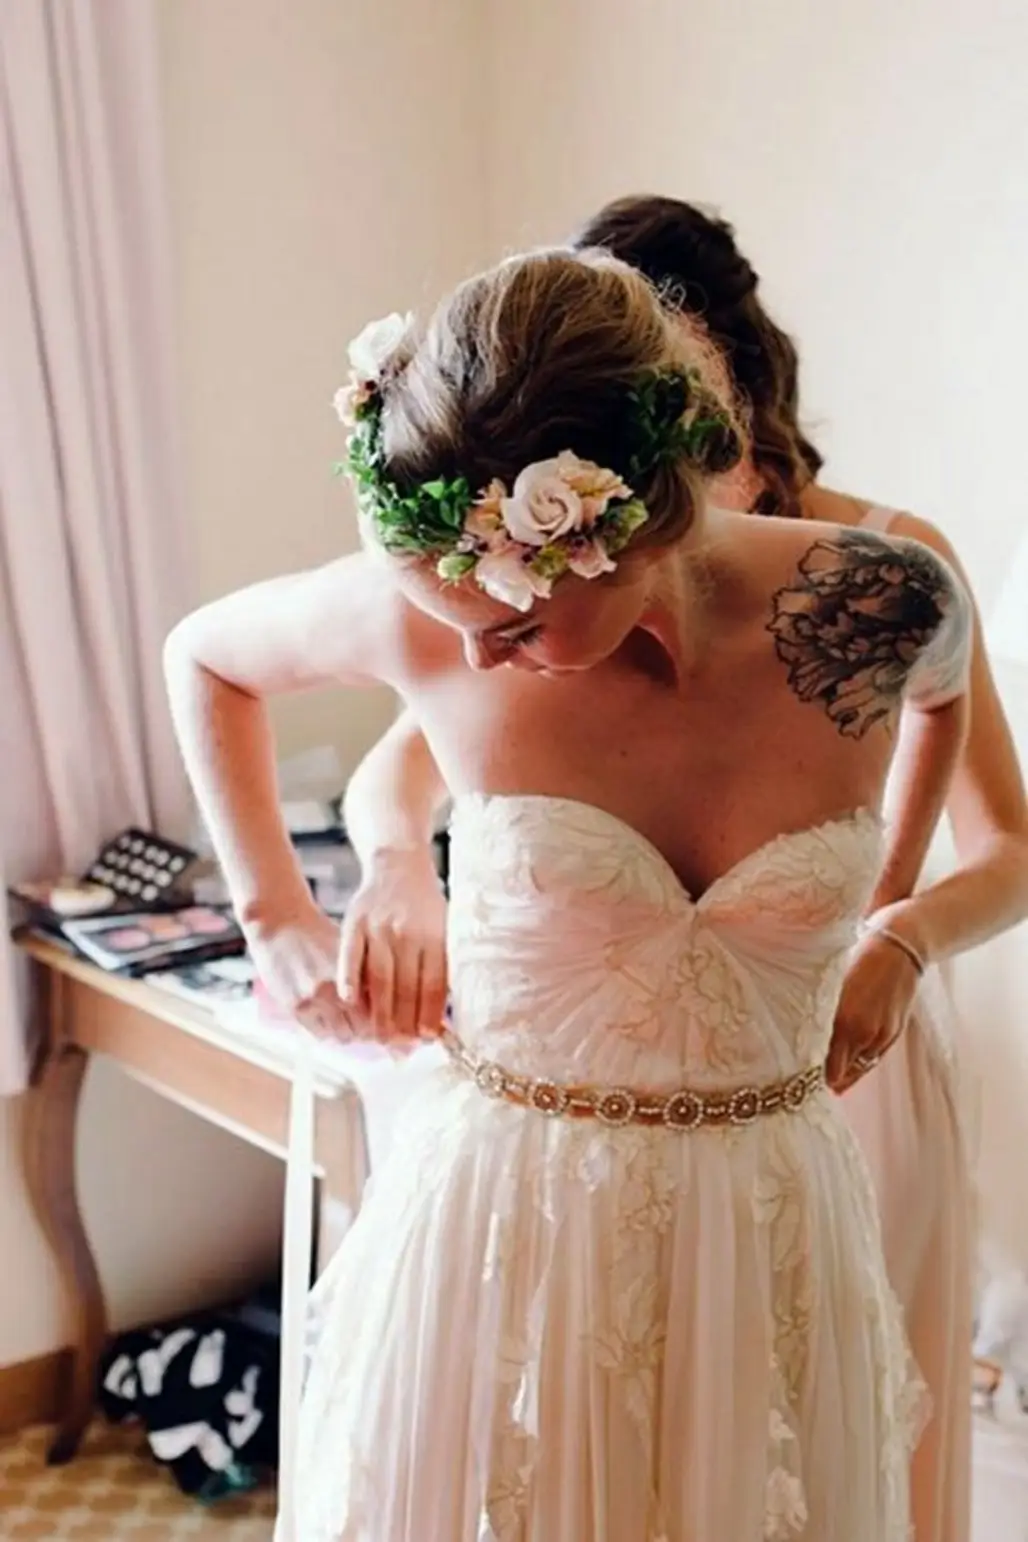 bride,clothing,wedding dress,dress,woman,